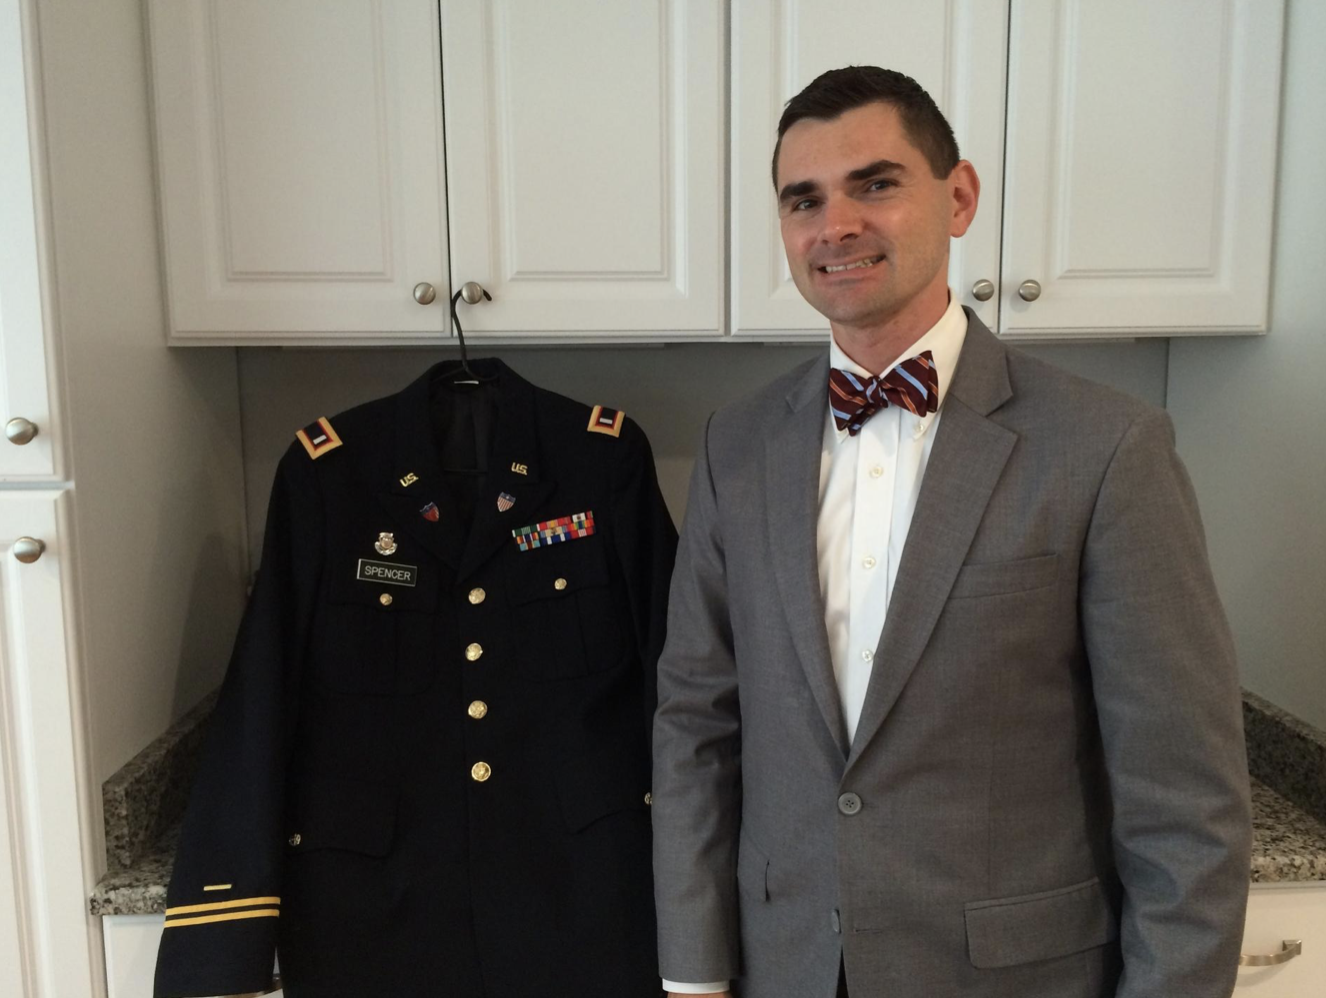 Lt. Scott Spencer, Husband to Heartillery founder, Returns to Norwood